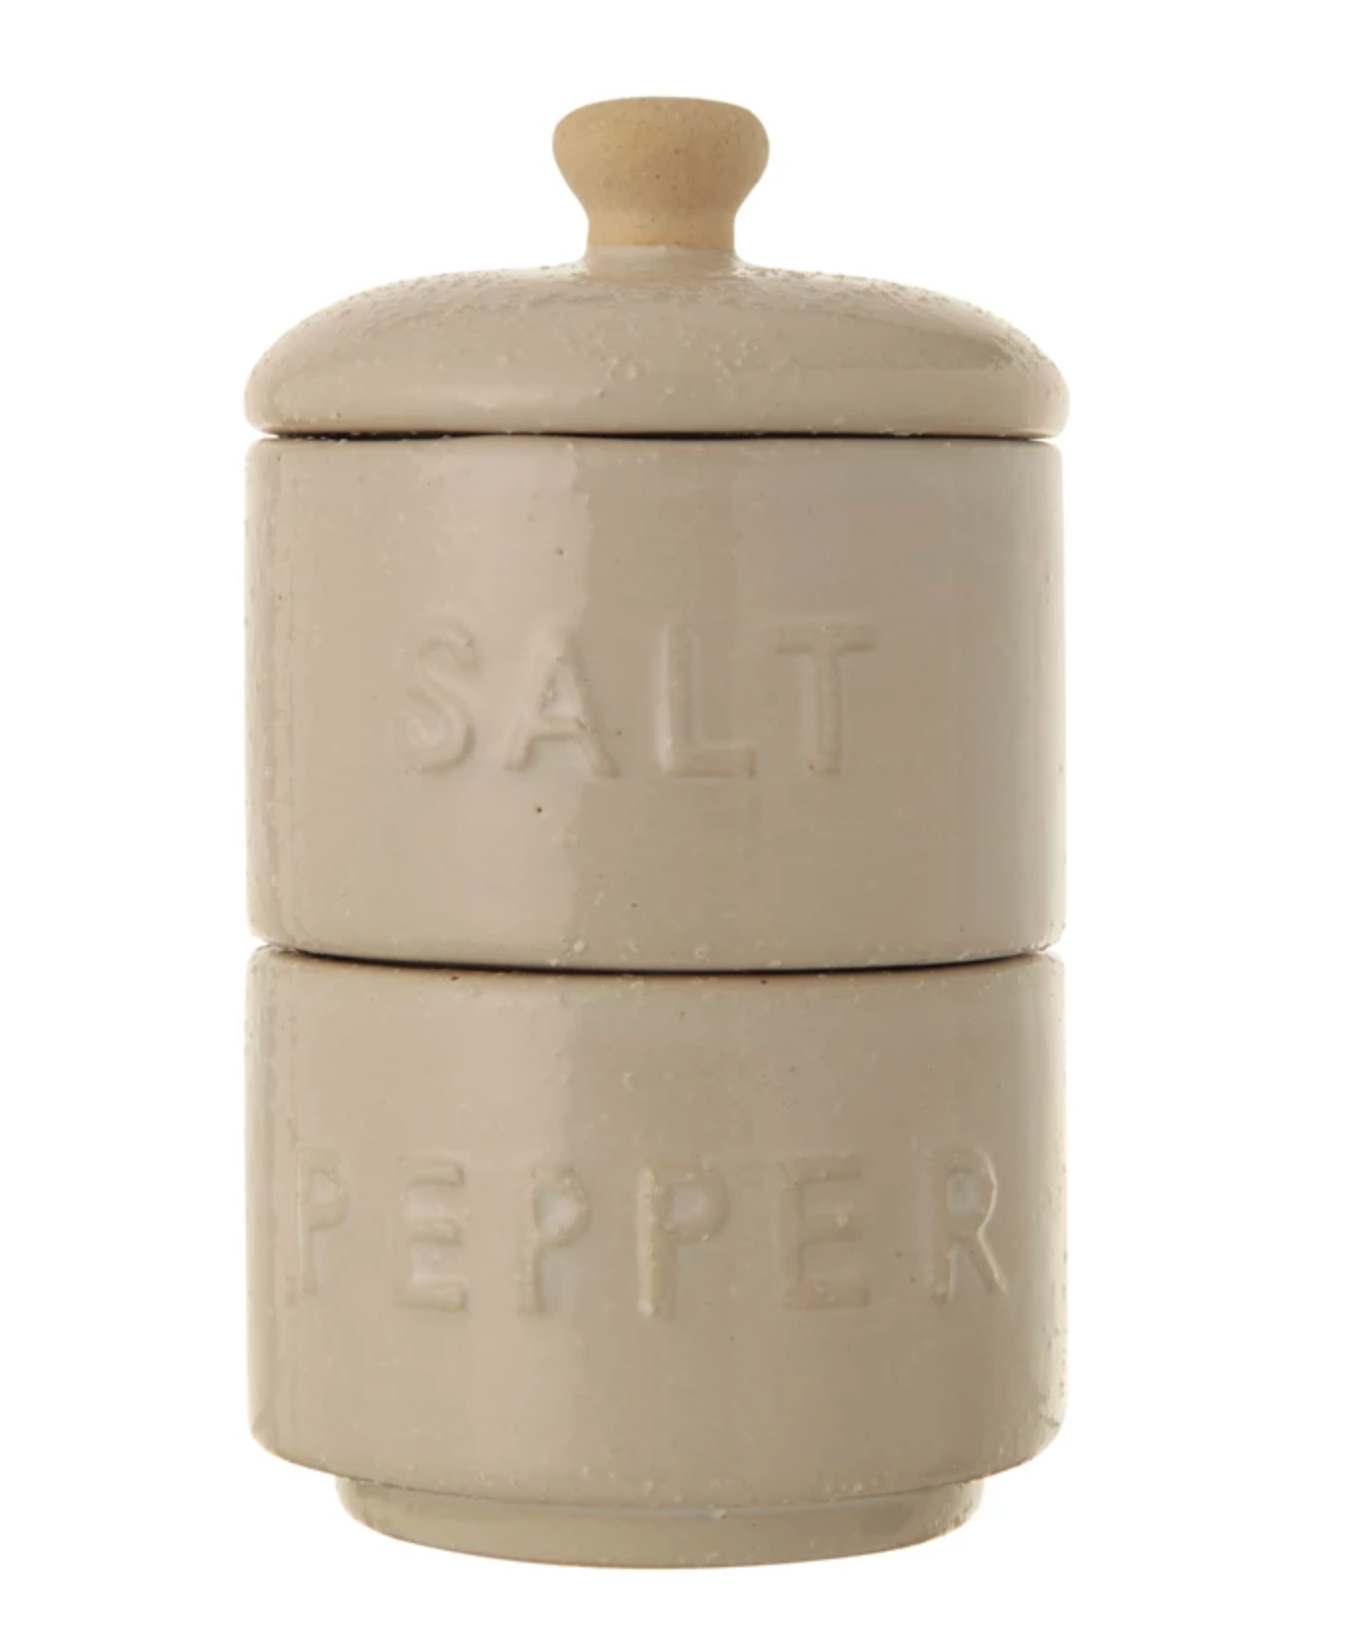 Salt & Pepper Pots with Lid